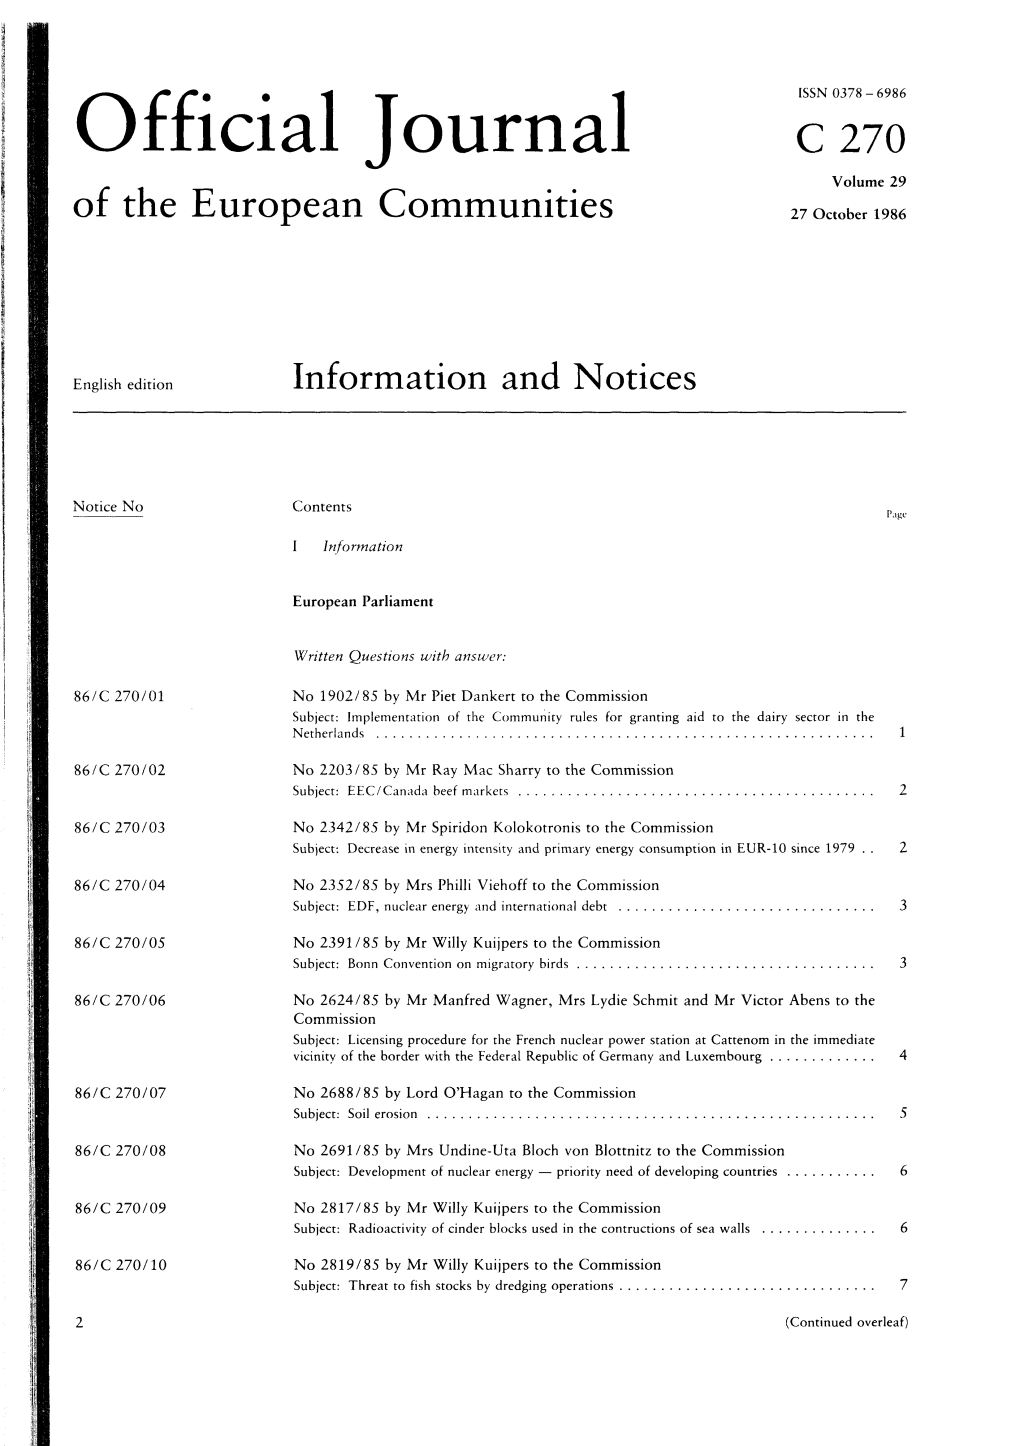 Official Journal C270 Volume 29 of the European Communities 27 October 1986